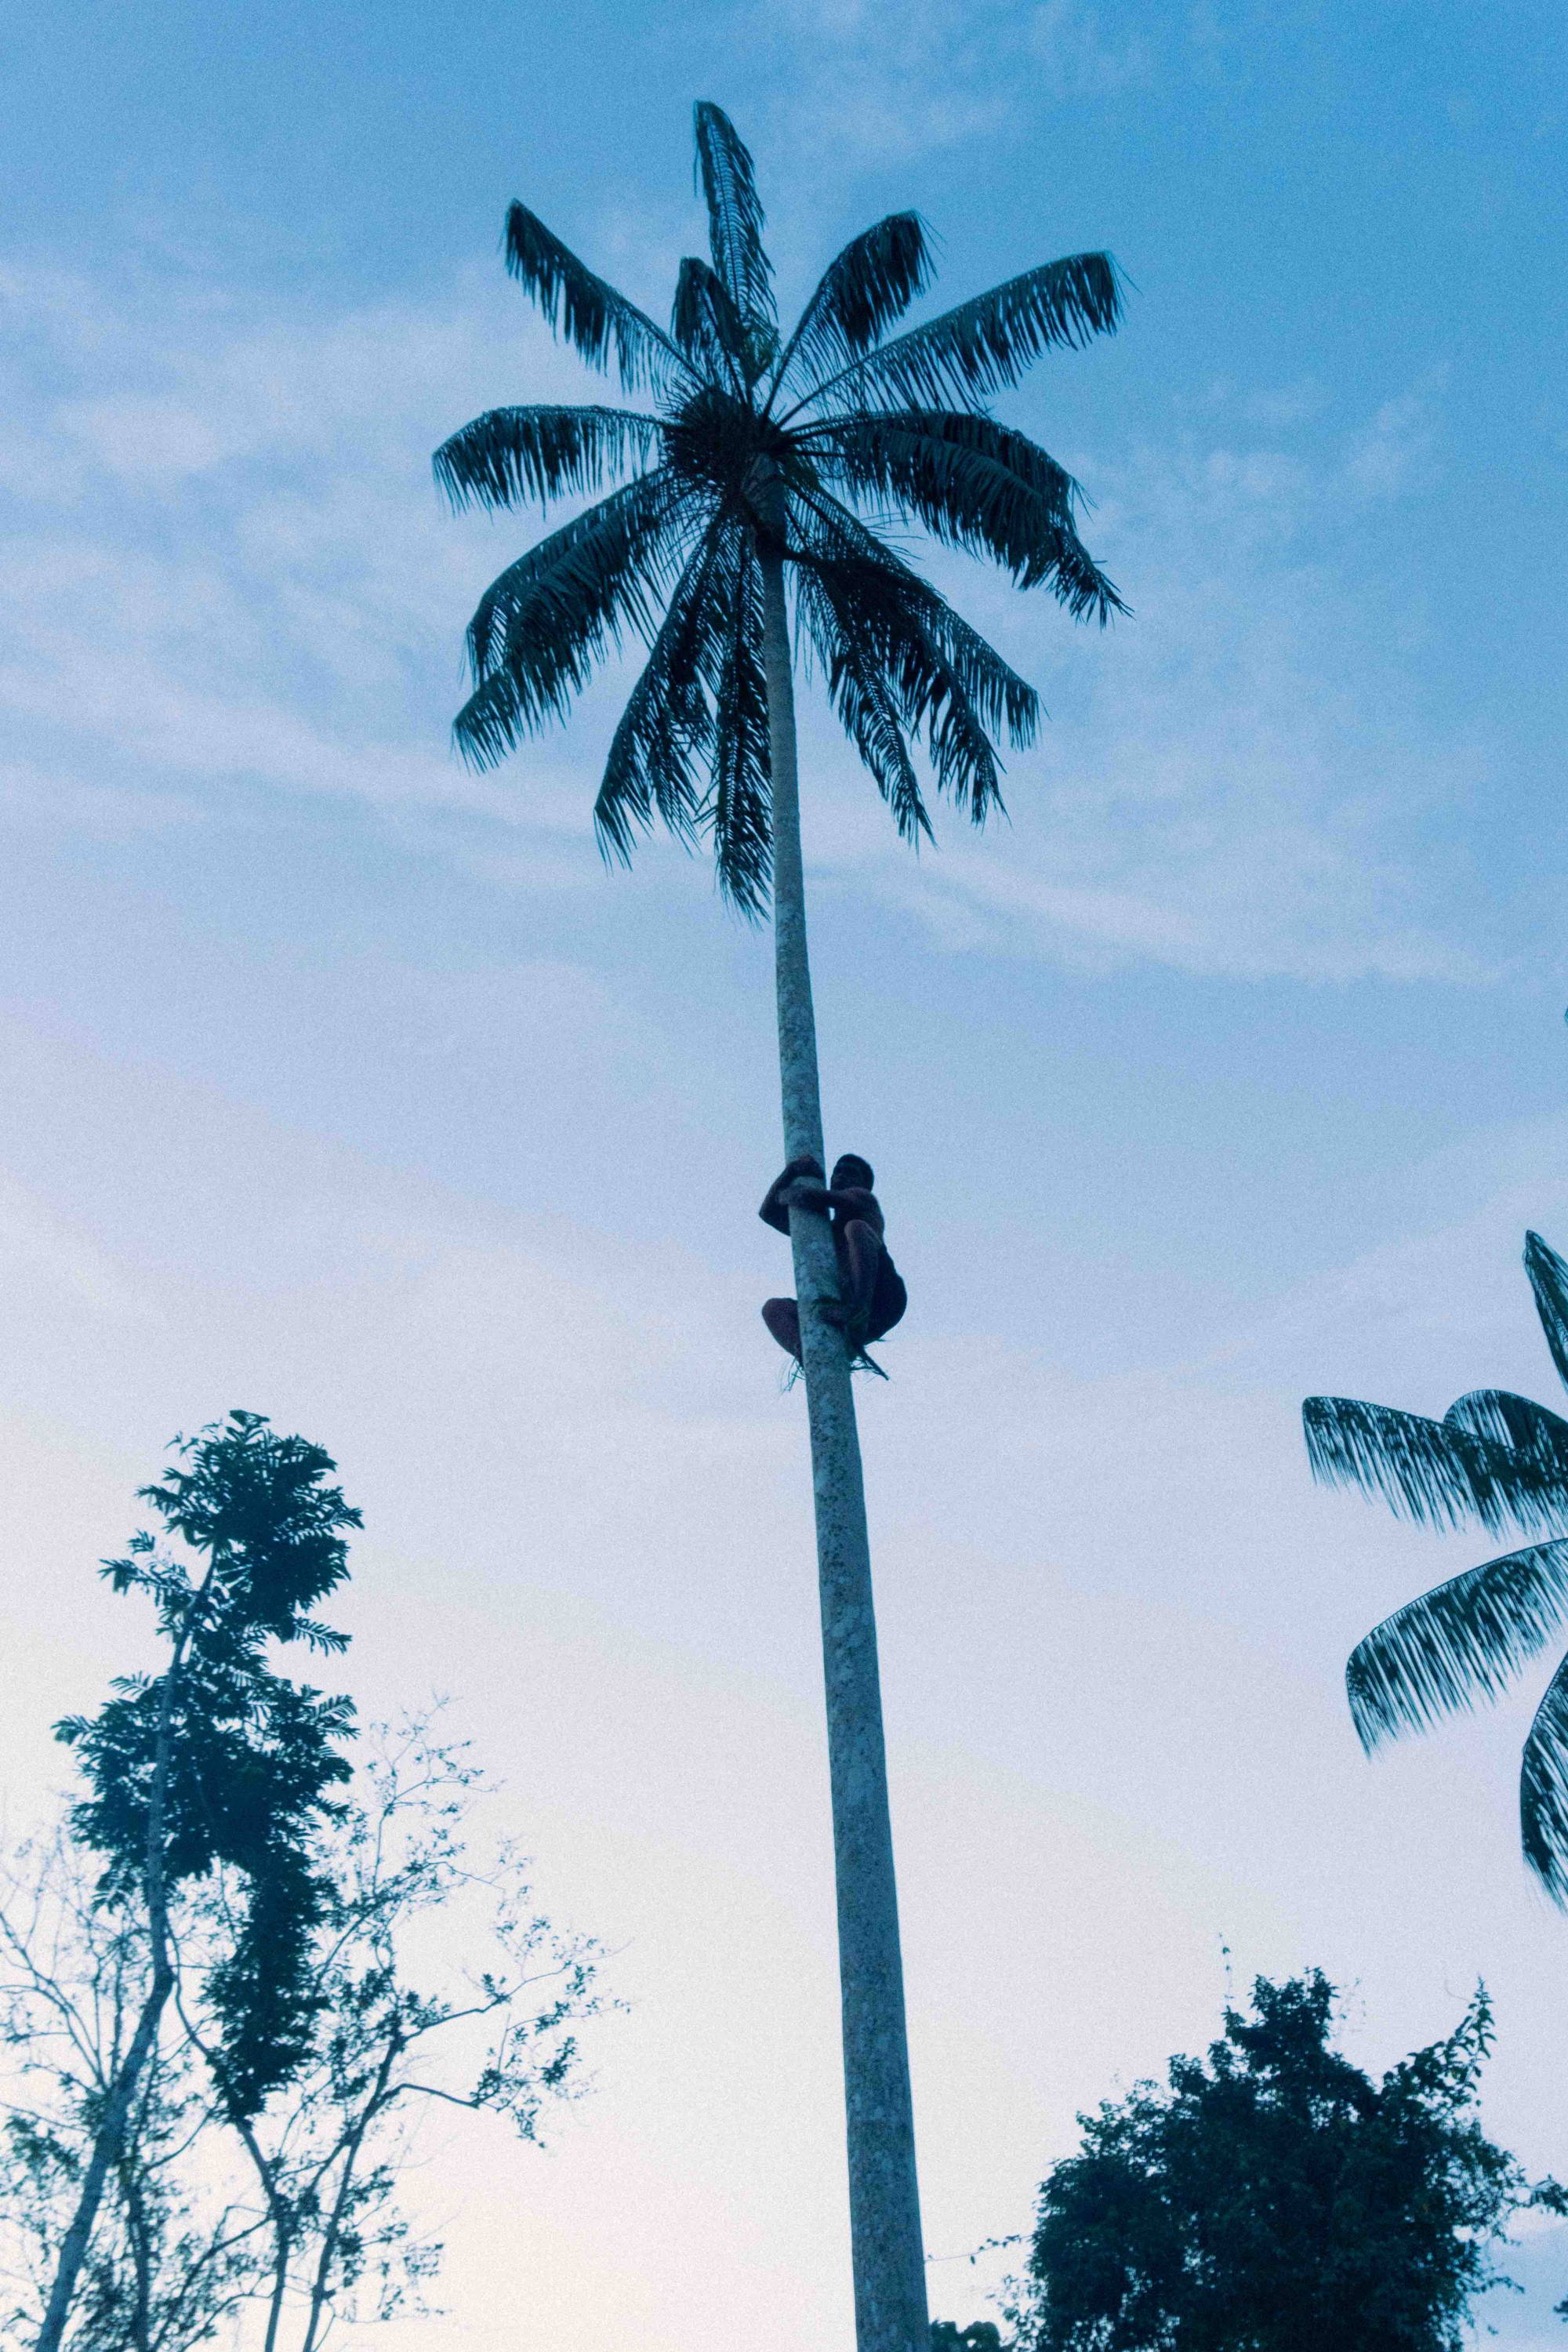 Yawanawá community member climbs an ácaí palm tree 